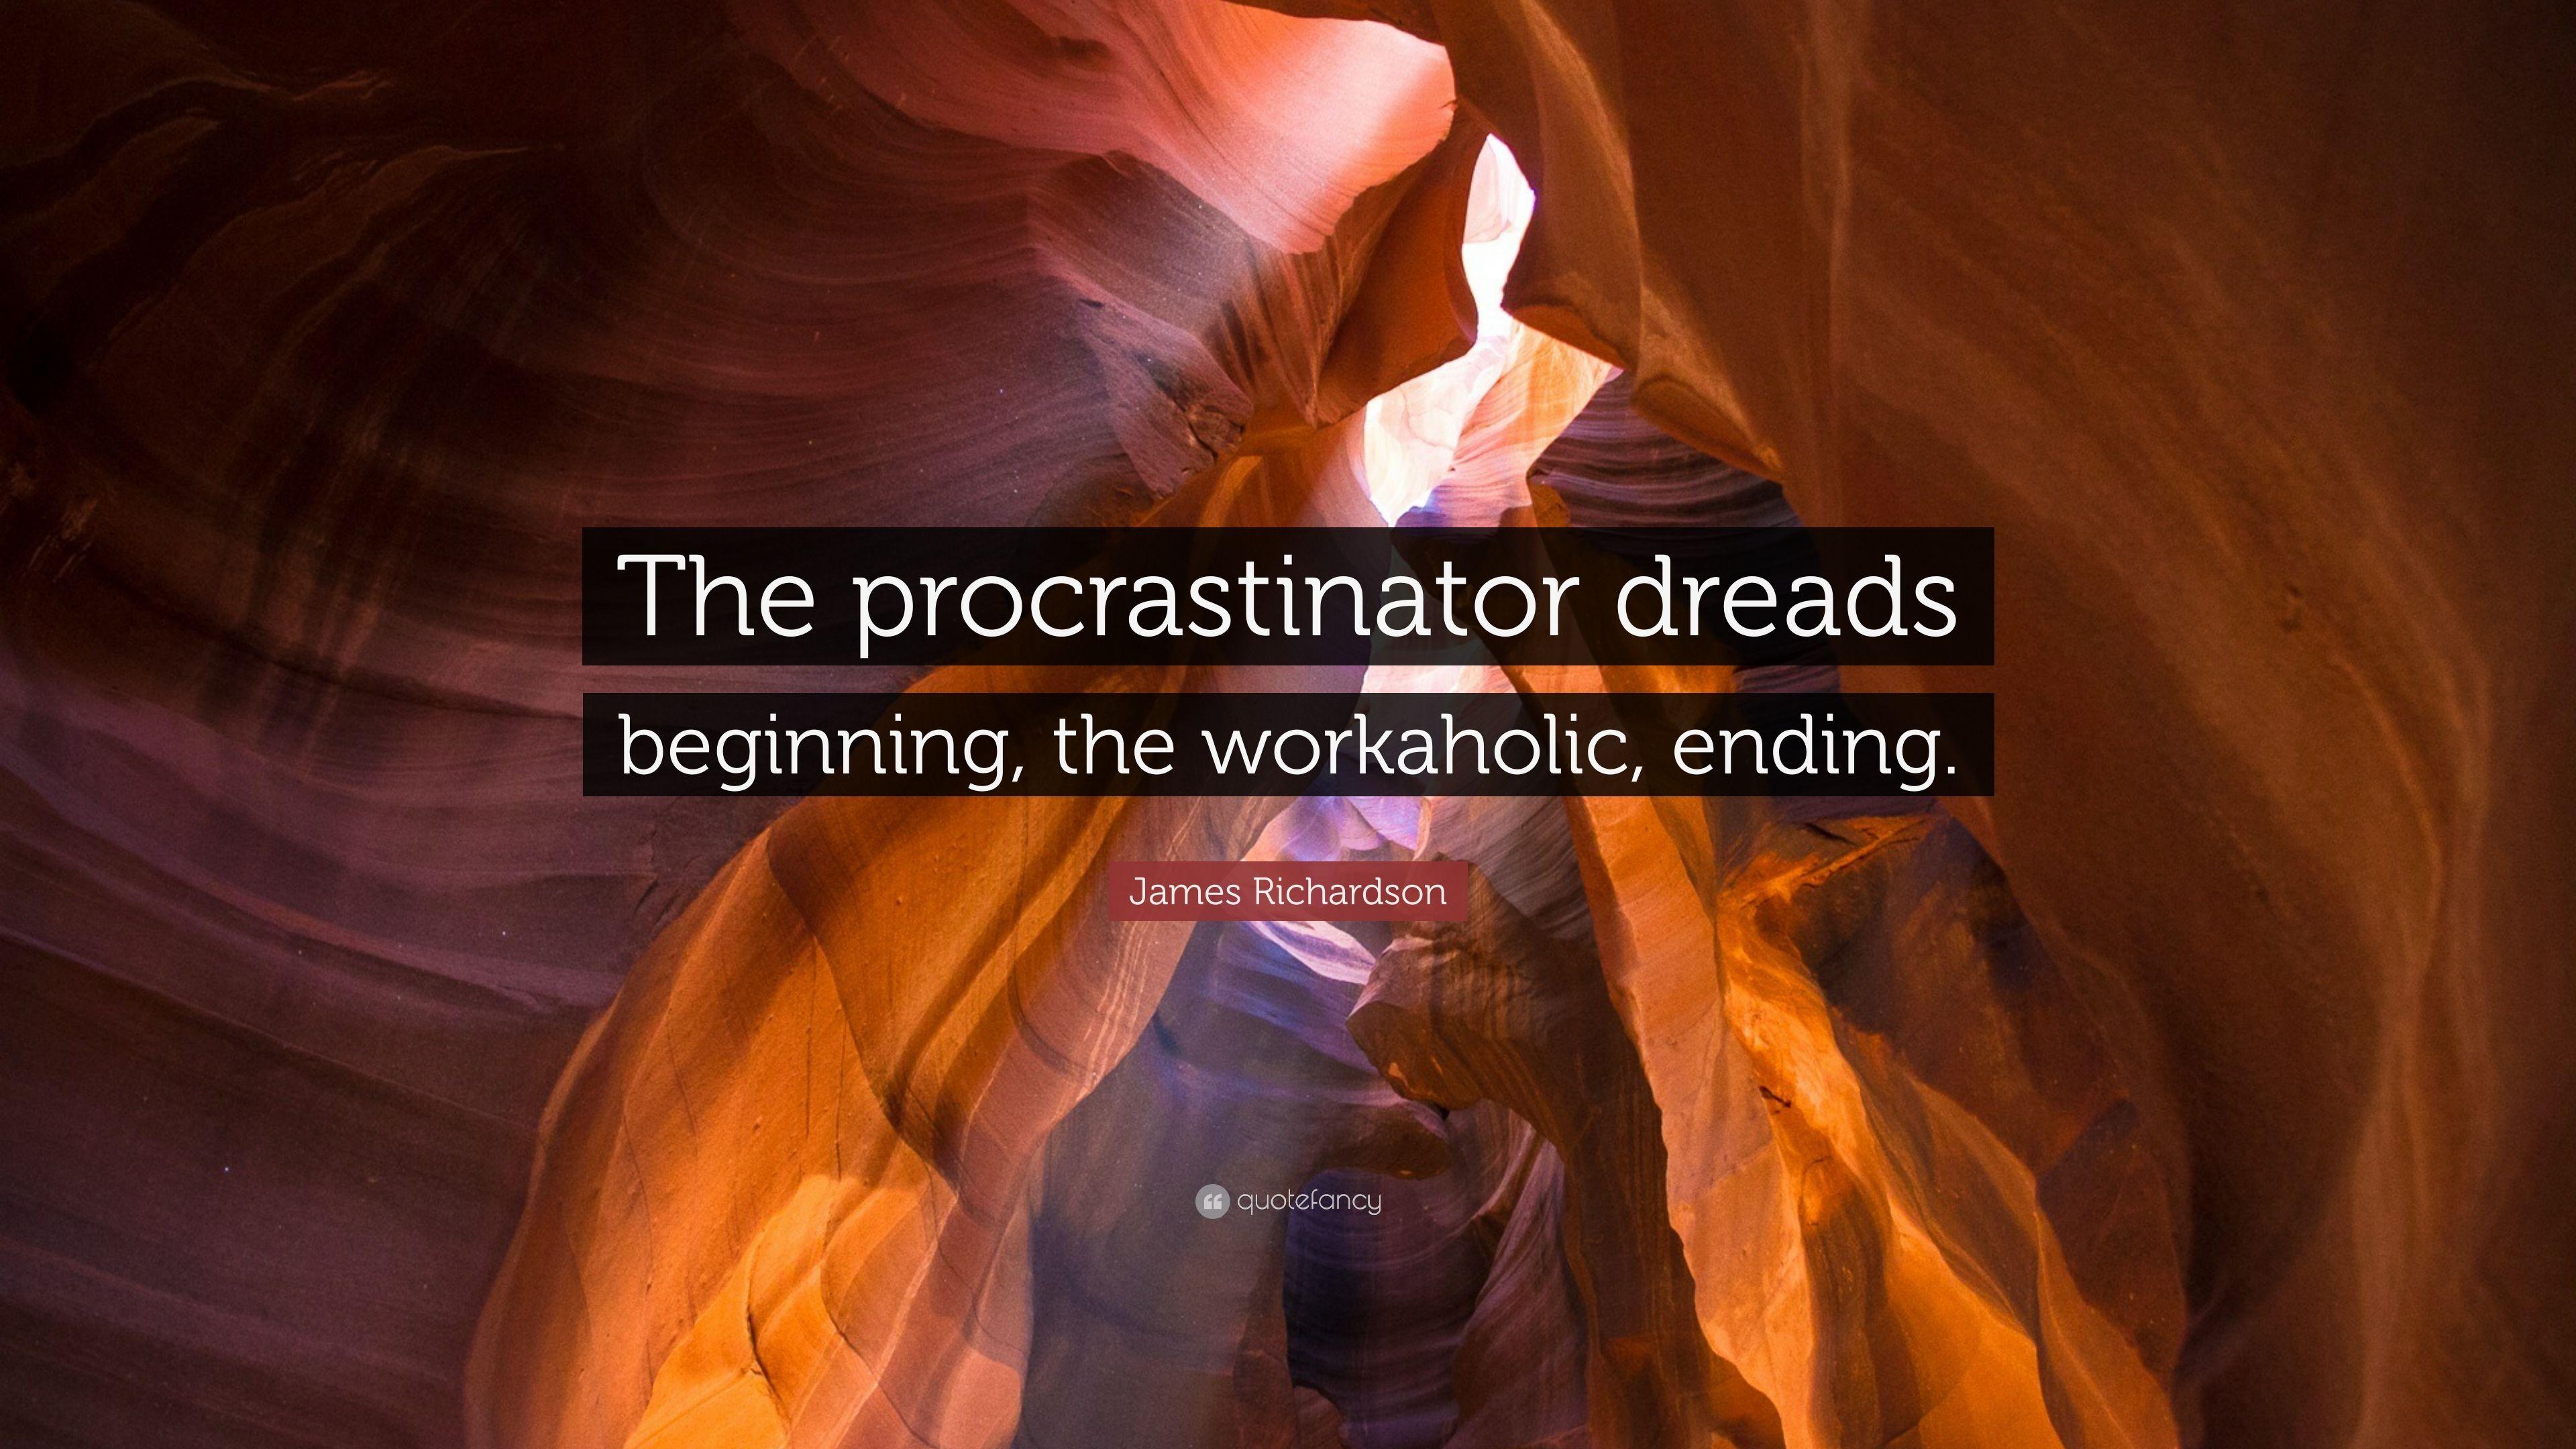 James Richardson Quote: “The procrastinator dreads beginning